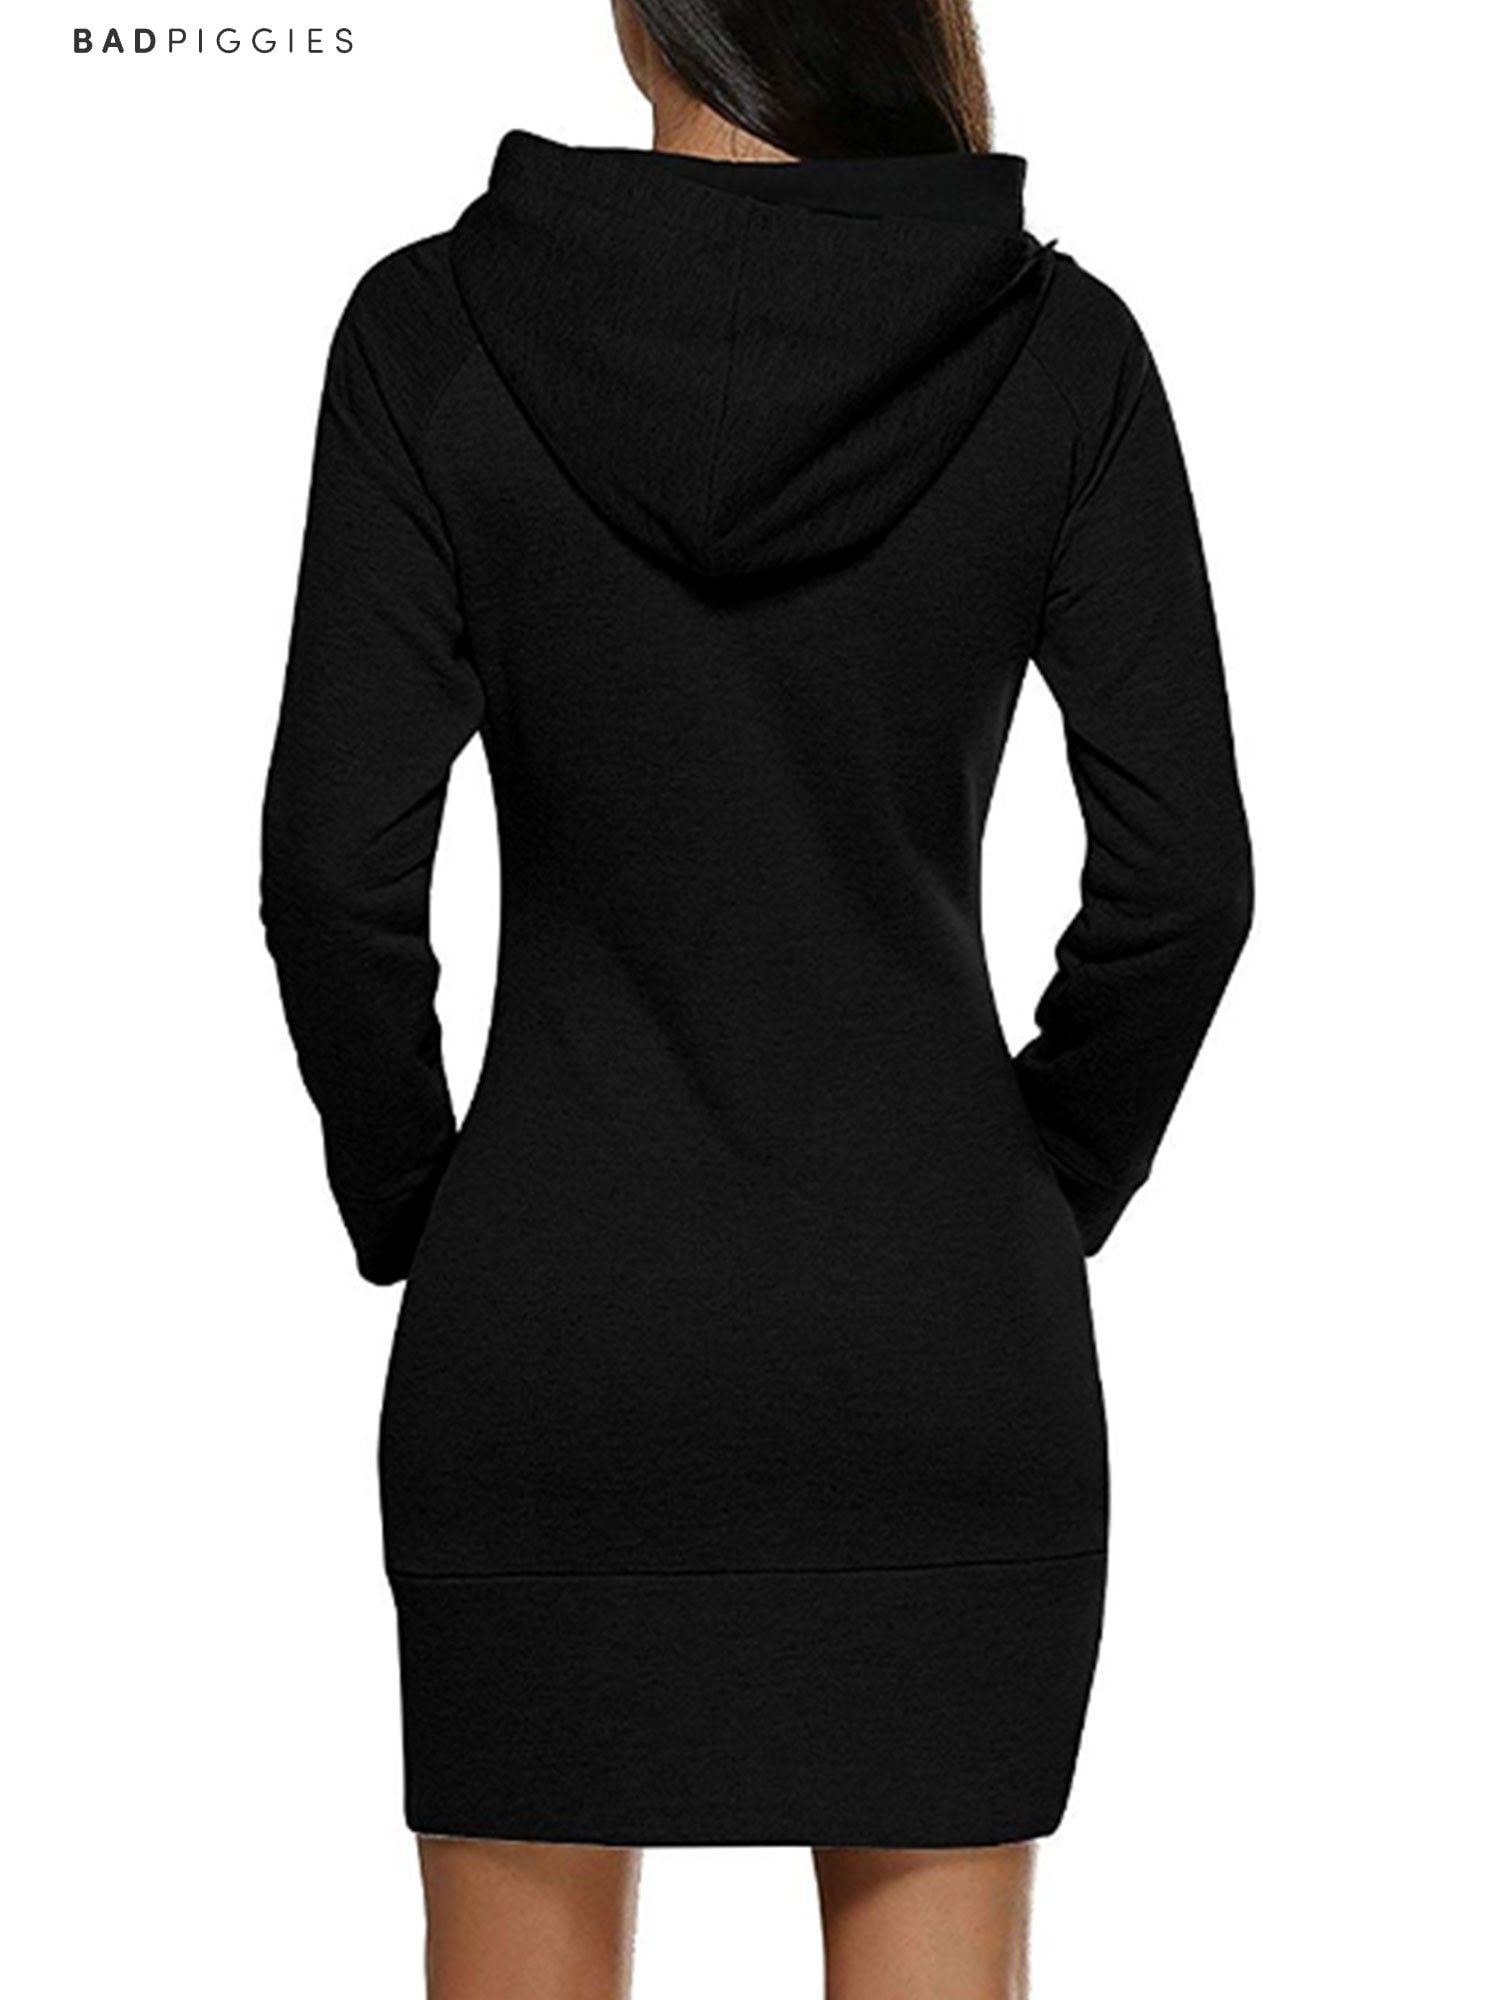 BadPiggies Women Midi Slim Dress (XL, Hoodie Sweater Cotton Sleeve Pullover Black) Dress Long Fit Pocket with